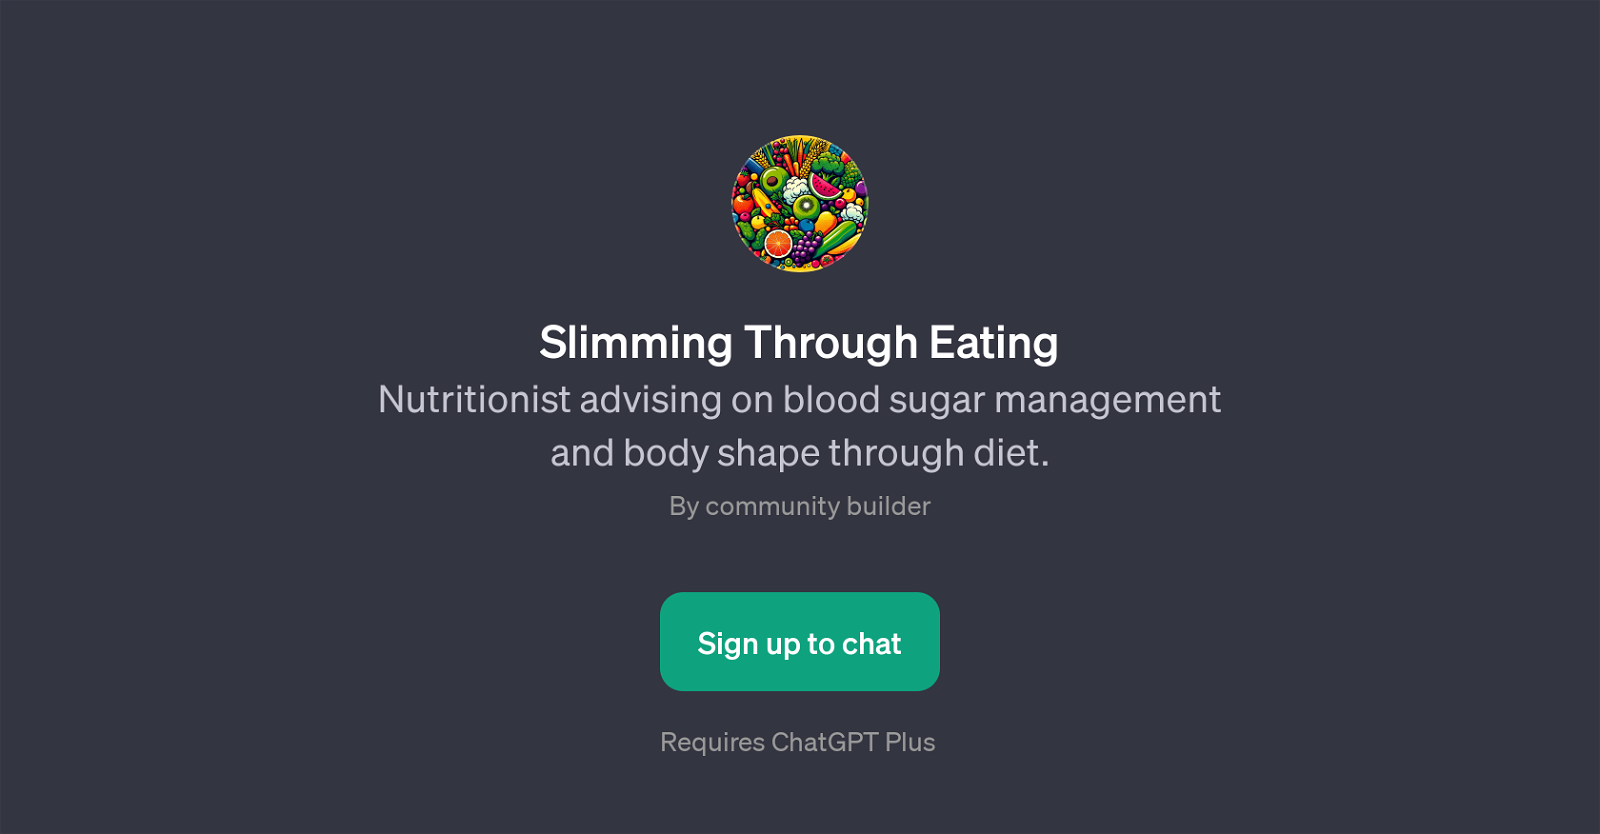 Slimming Through Eating website